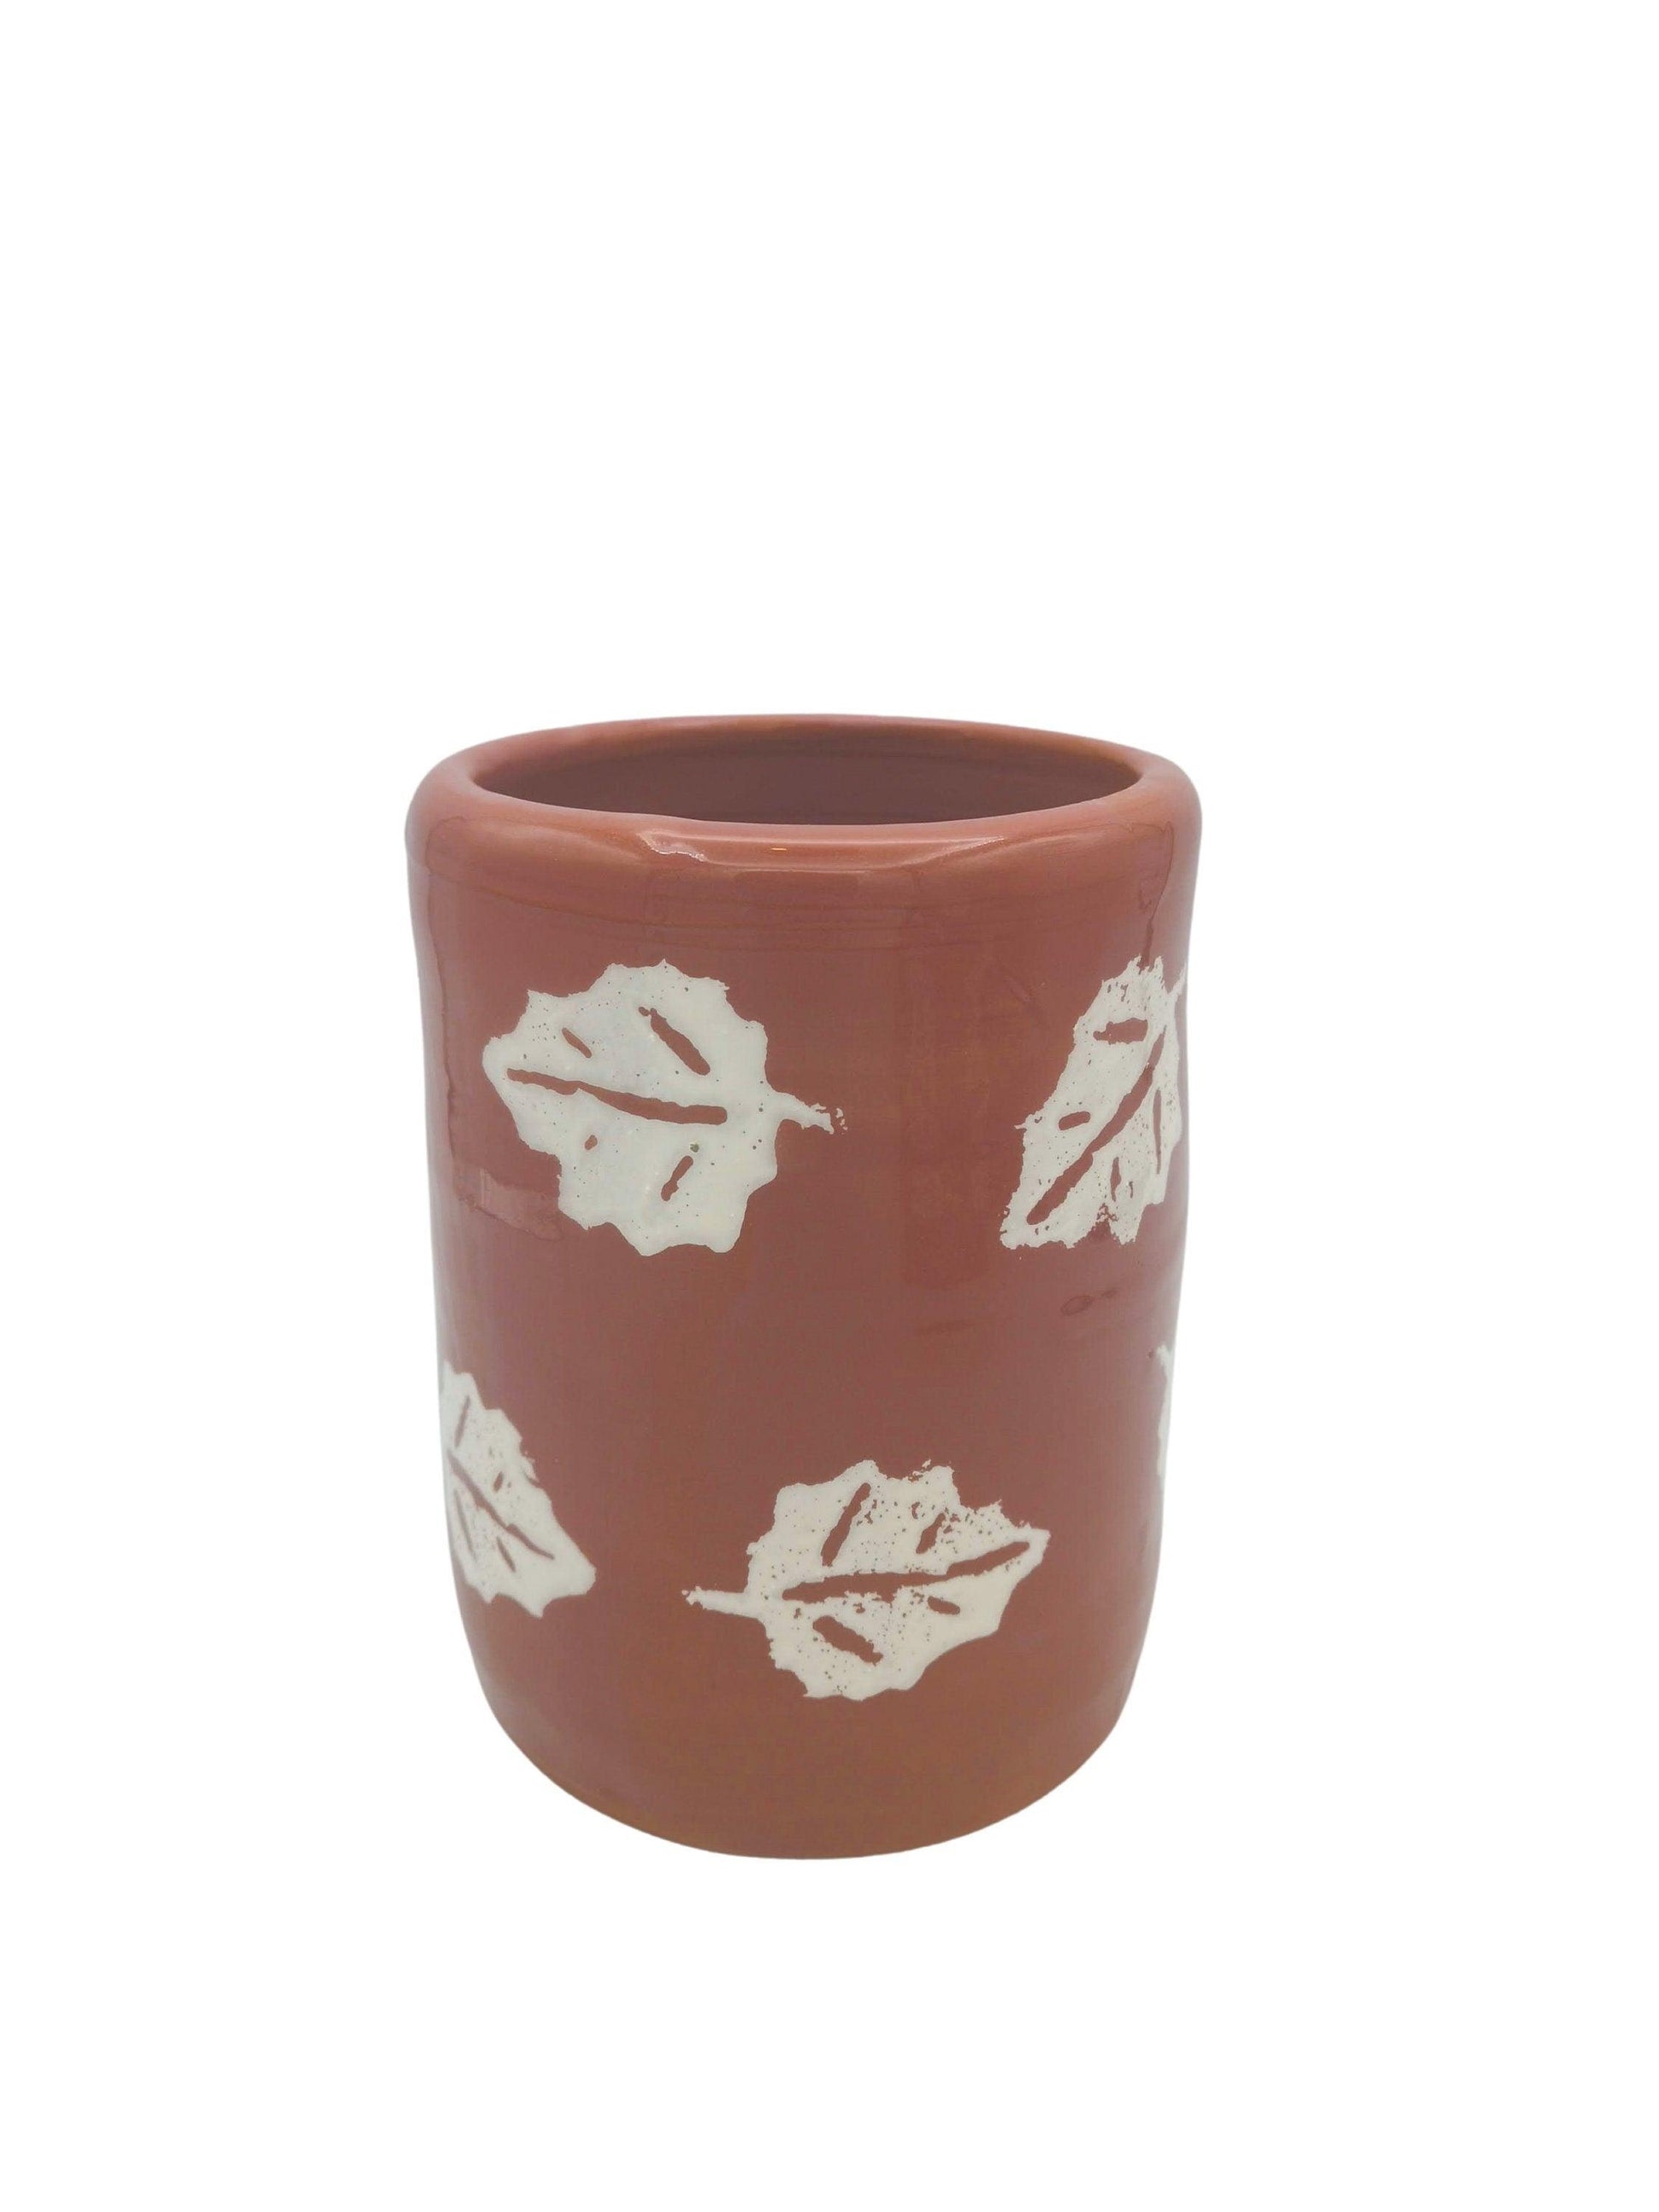 1Pc Handmade Ceramic Terracotta Vase Large Utensil Holder, Spoon Holder Farmhouse Decor House Warming Gifts New Home Paintbrush Holder Crock - Ceramica Ana Rafael